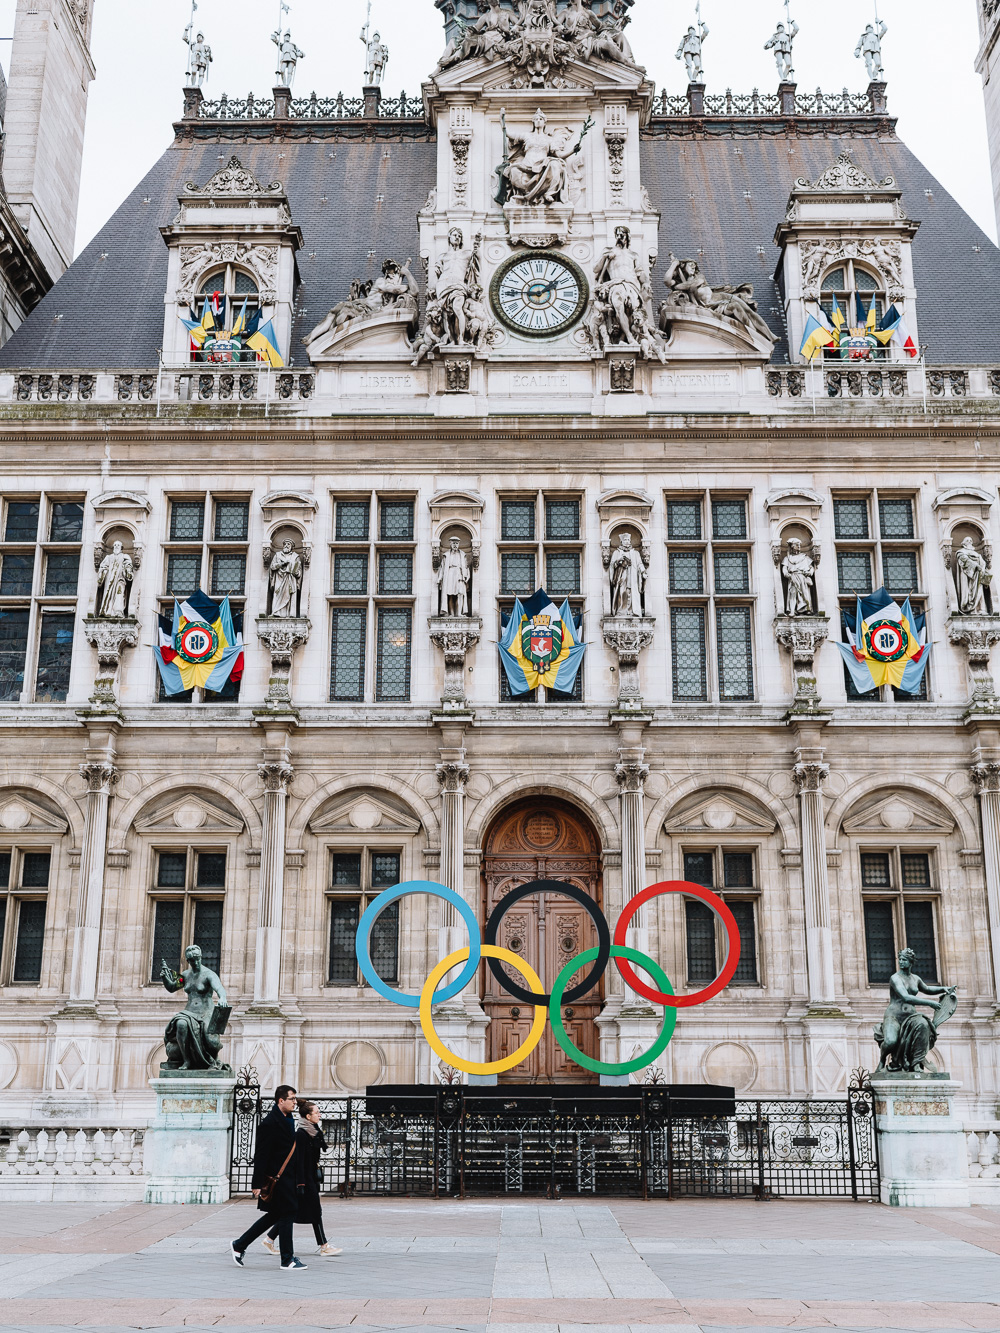 Paris Olympics 2024 dates, schedule, tickets & hotels! This is Paris